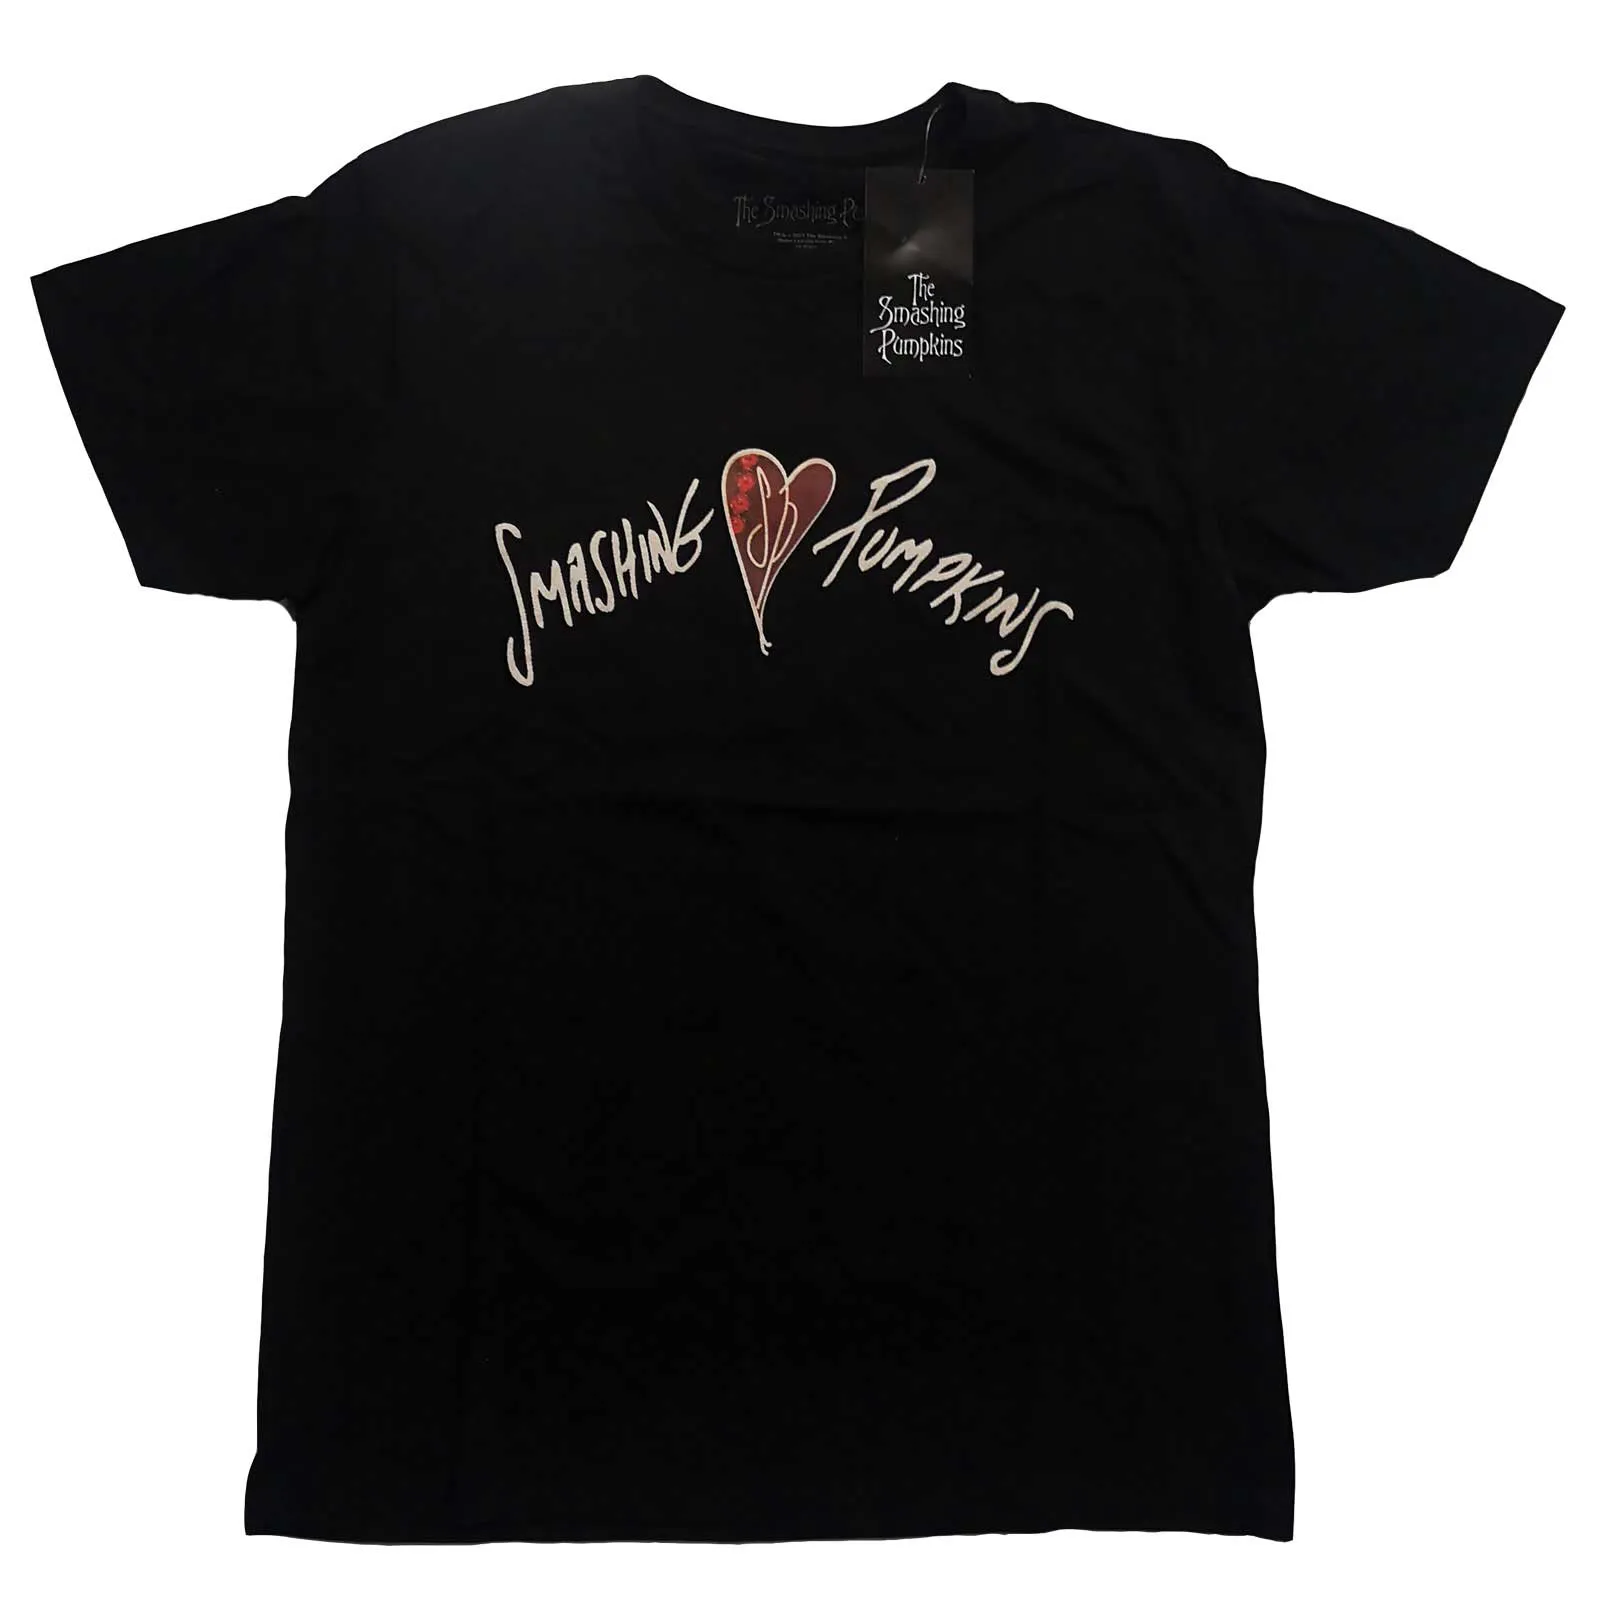 Smashing Pumpkins - Unisex T-Shirt Gish Heart artwork